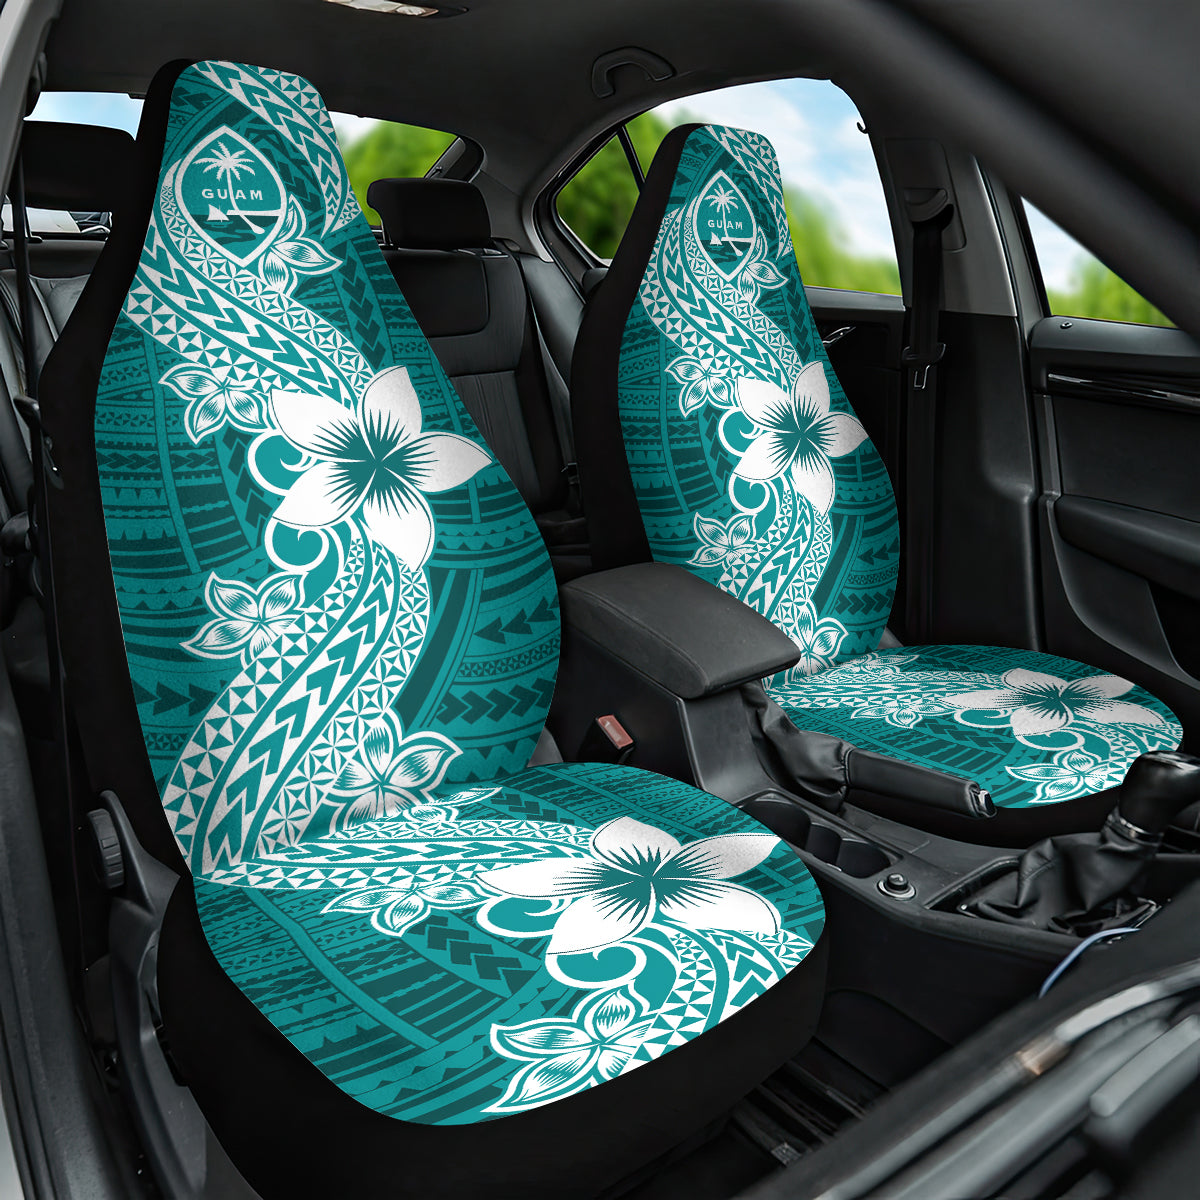 Hafa Adai Guam Car Seat Cover Polynesian Floral Teal Pattern LT01 One Size Teal - Polynesian Pride